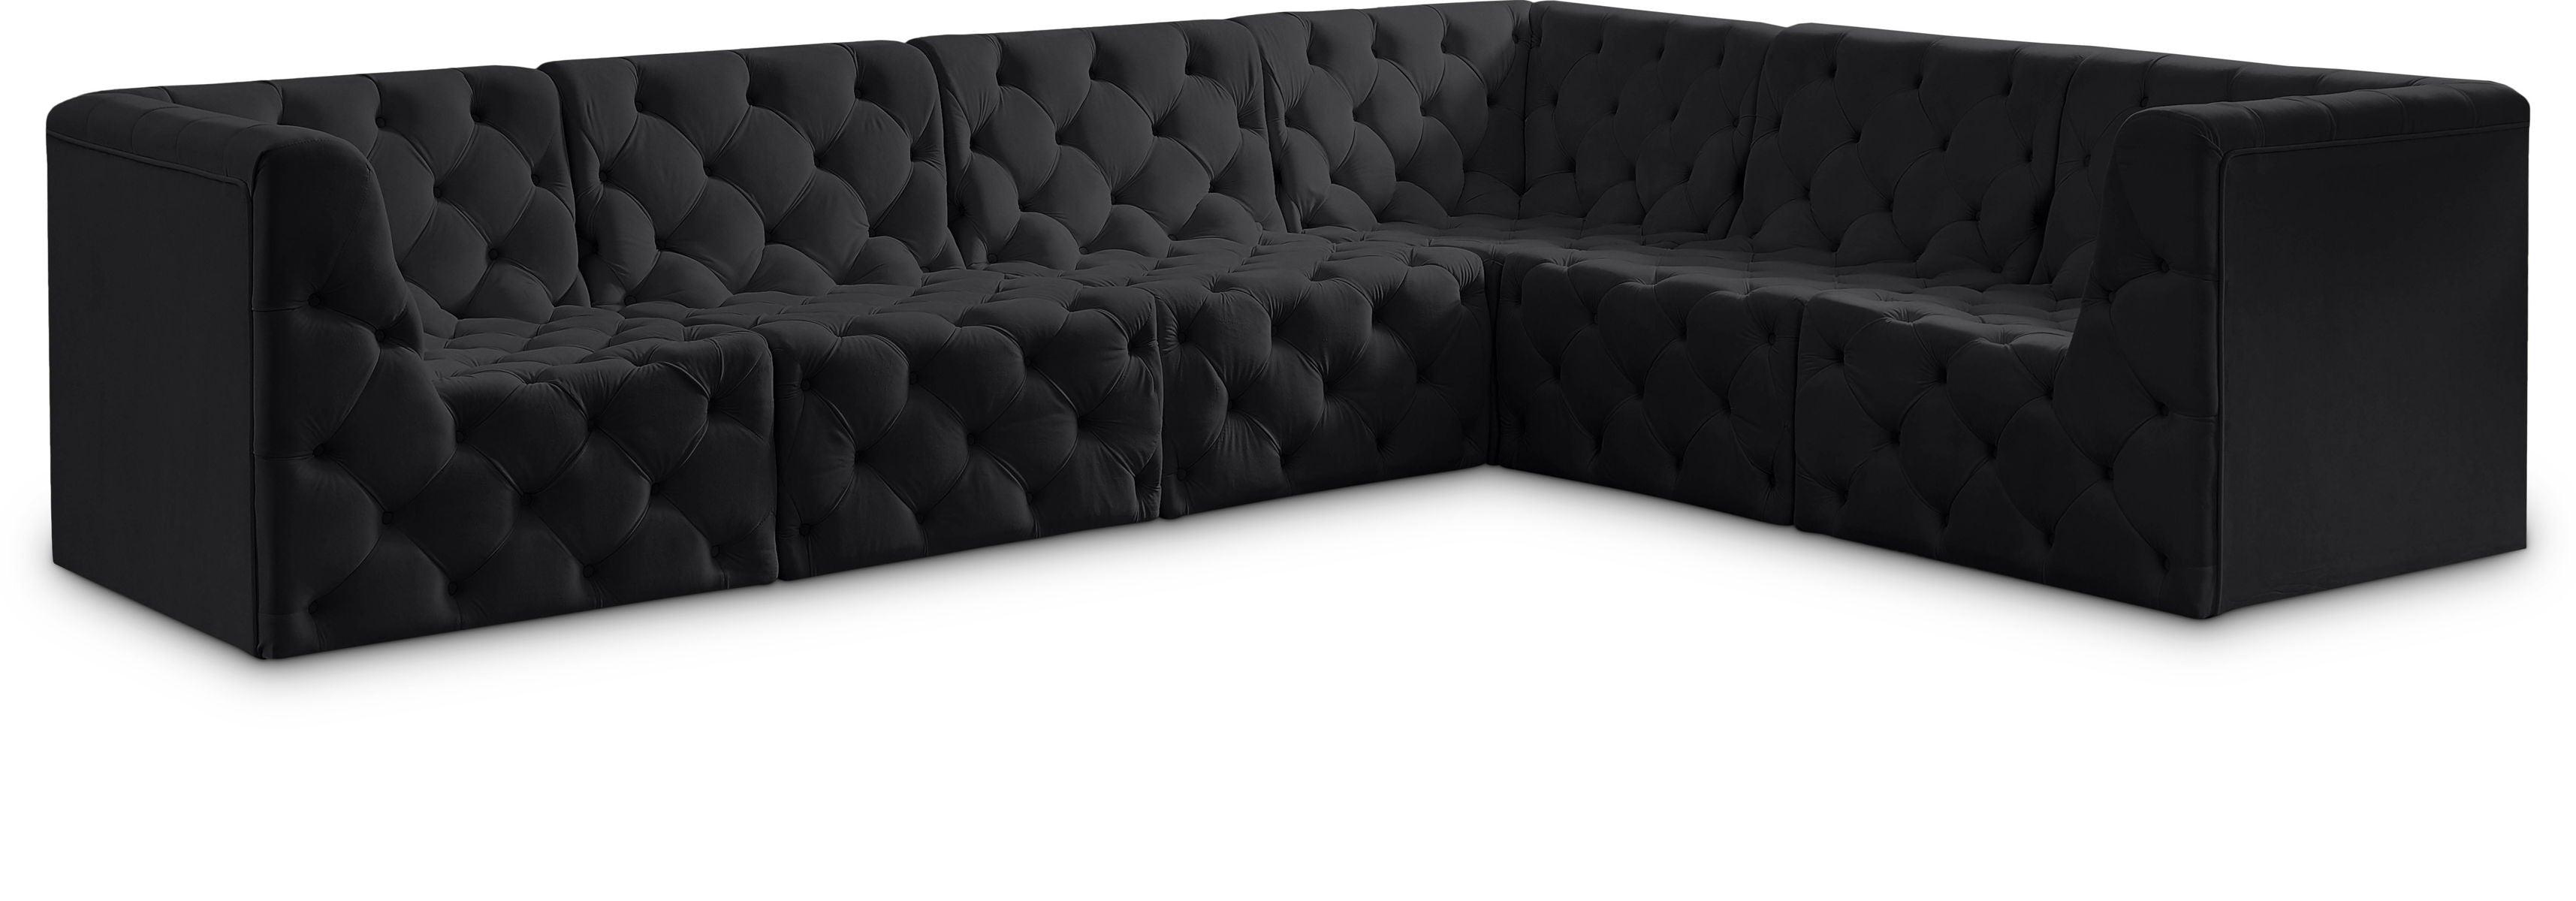 Meridian Furniture - Tuft - Modular Sectional 6 Piece - Black - Fabric - 5th Avenue Furniture